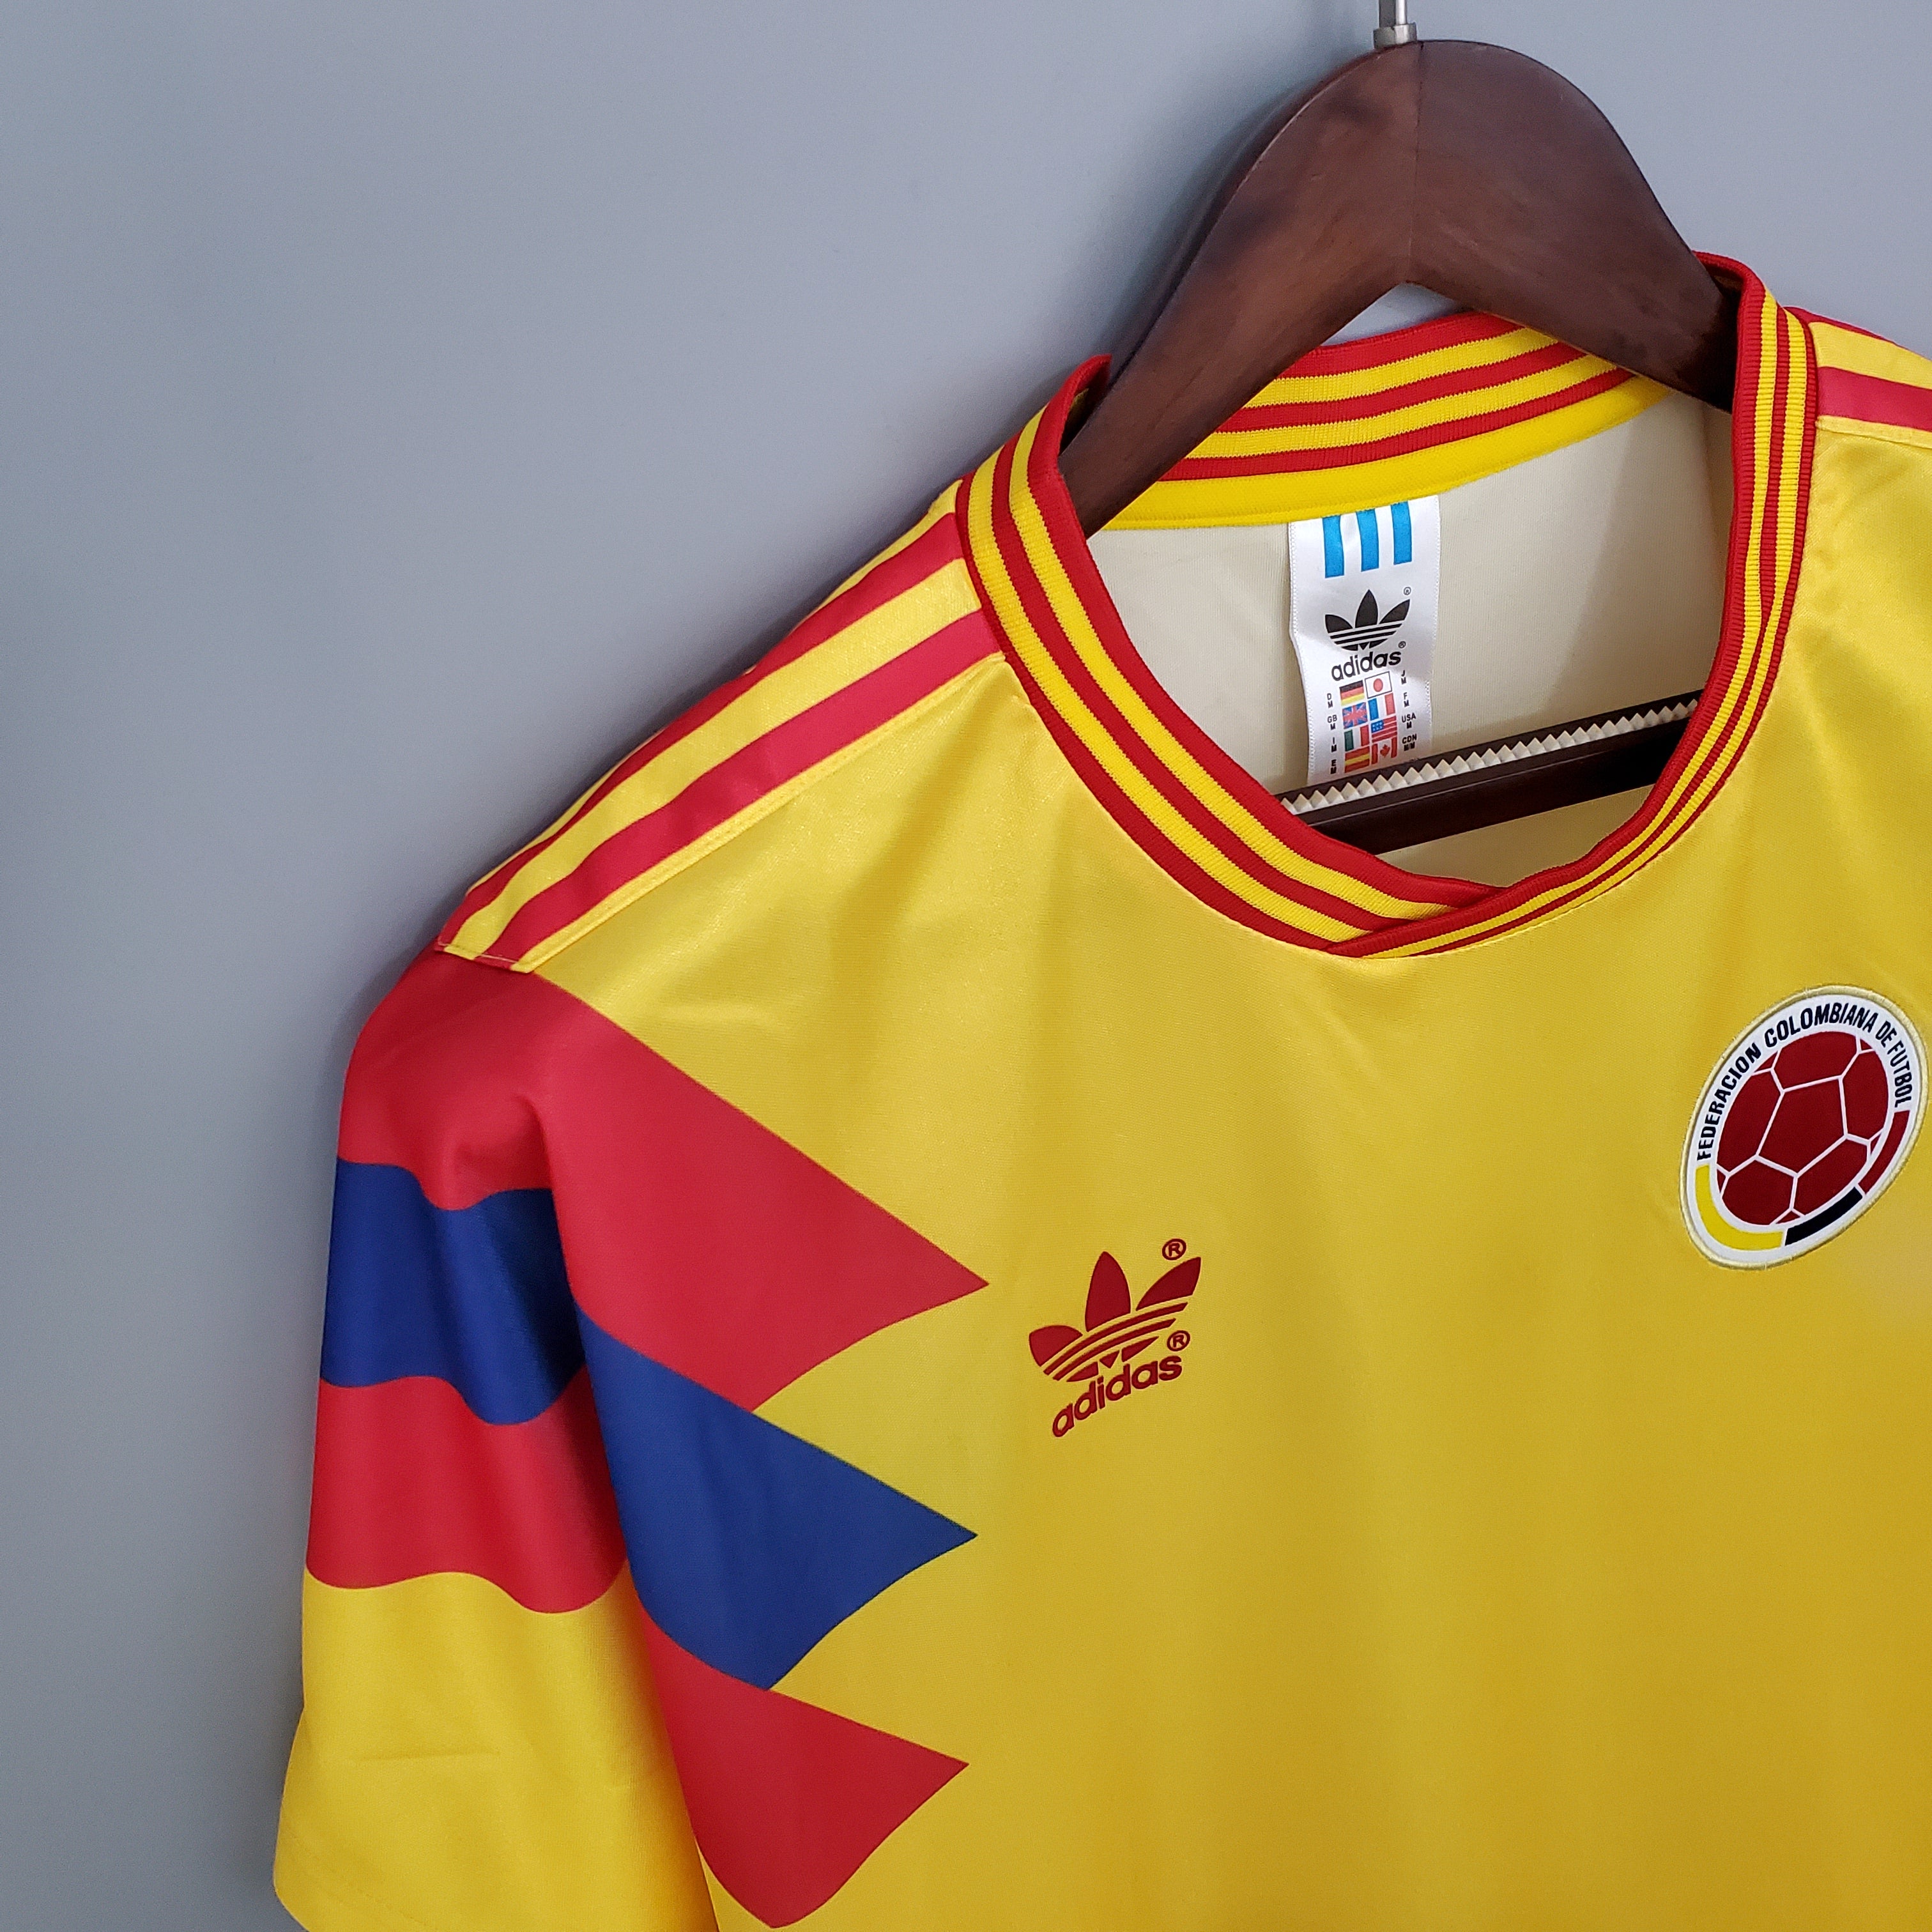 seleccion colombia jersey